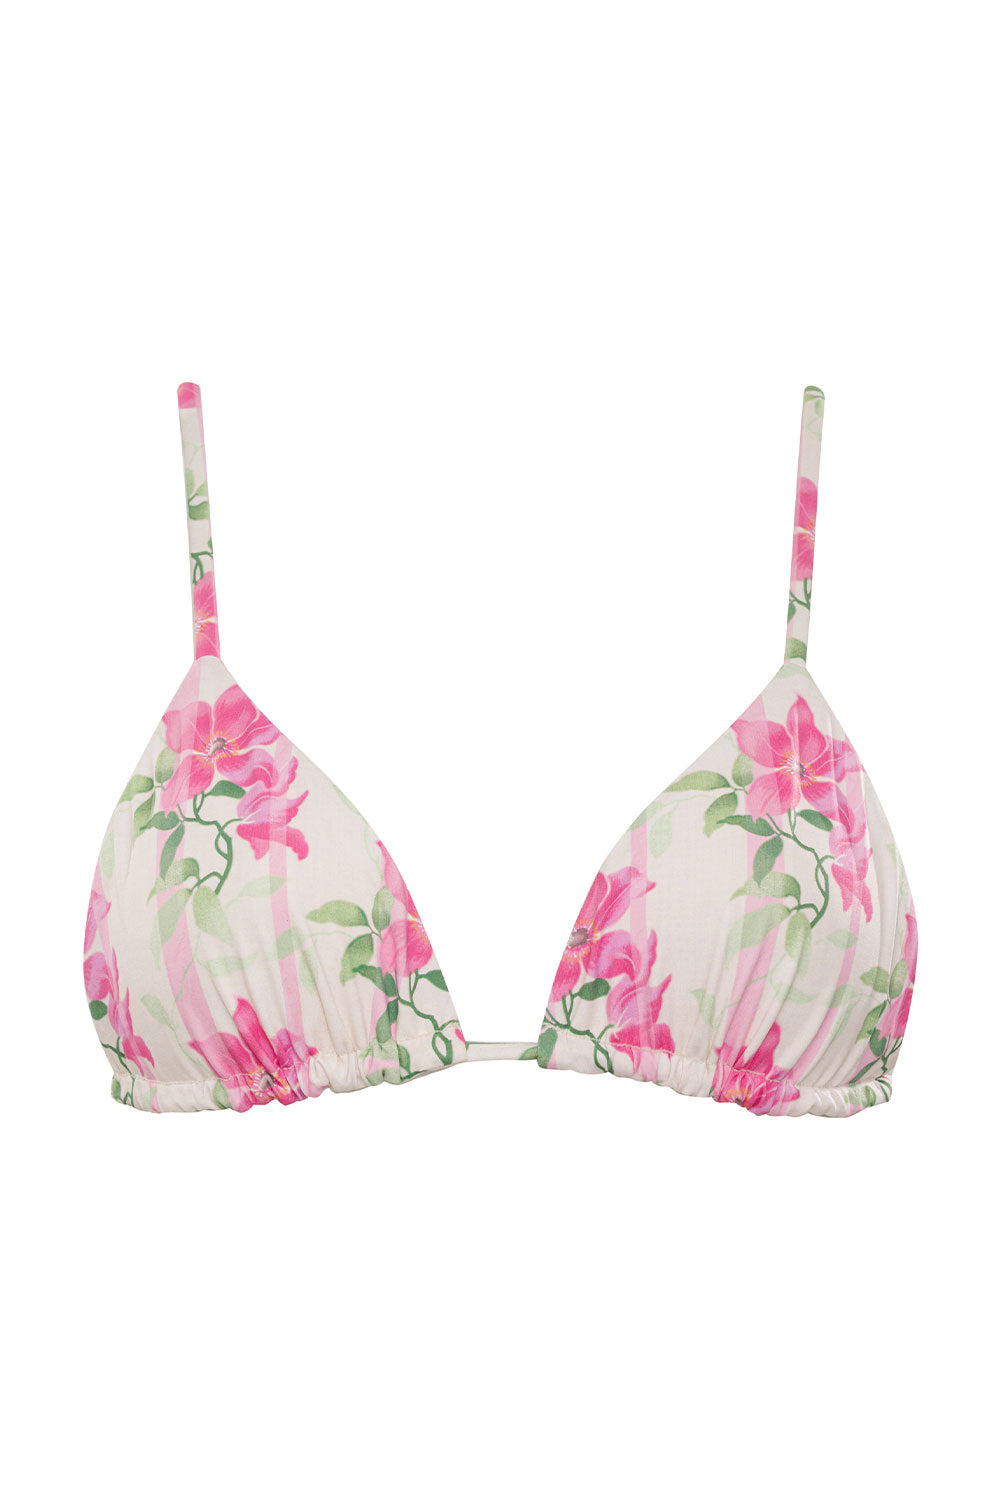 Frankies Bikinis - Lumia Floral Triangle Bikini Top - Tiger Lily